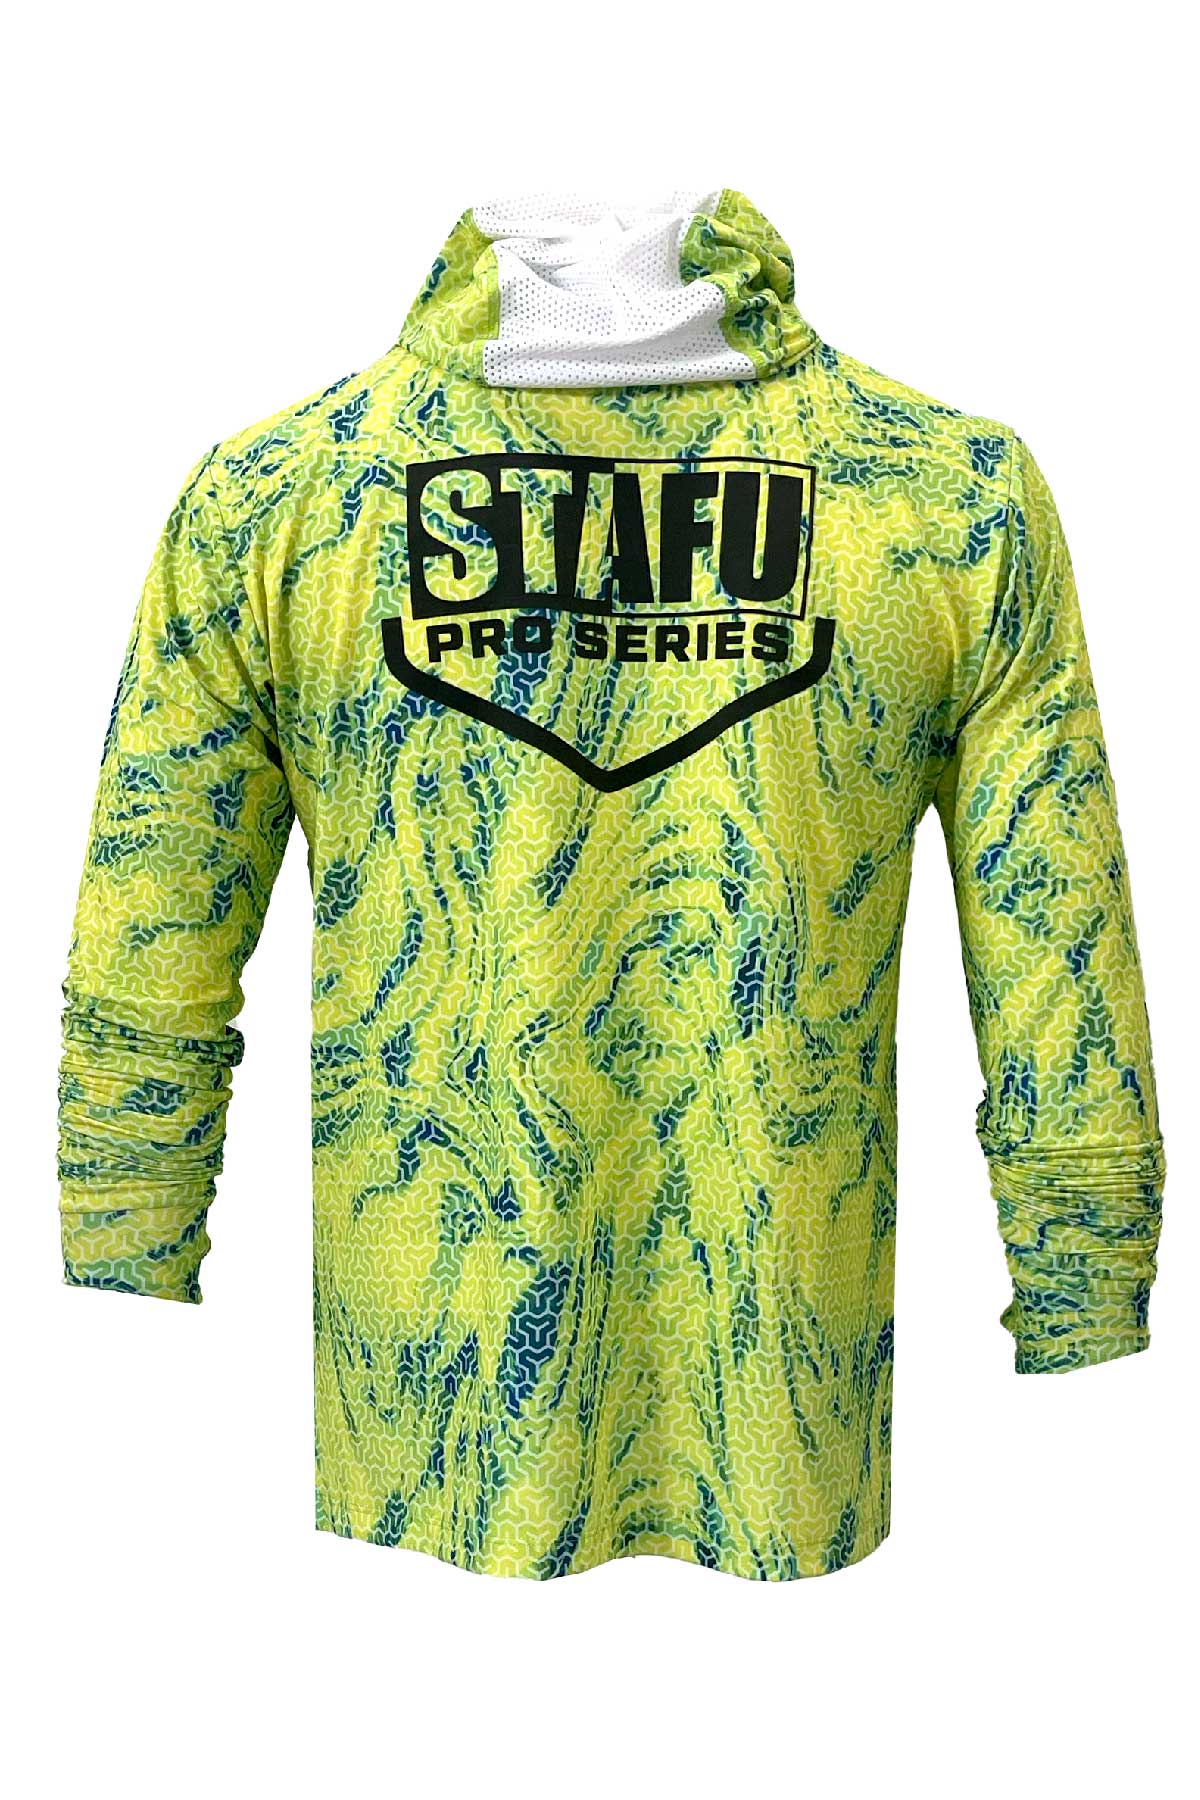 Haka Men's Hooded Long Sleeve Fisherman Sailor Trophy Patterned Lime UV Protected Shirt